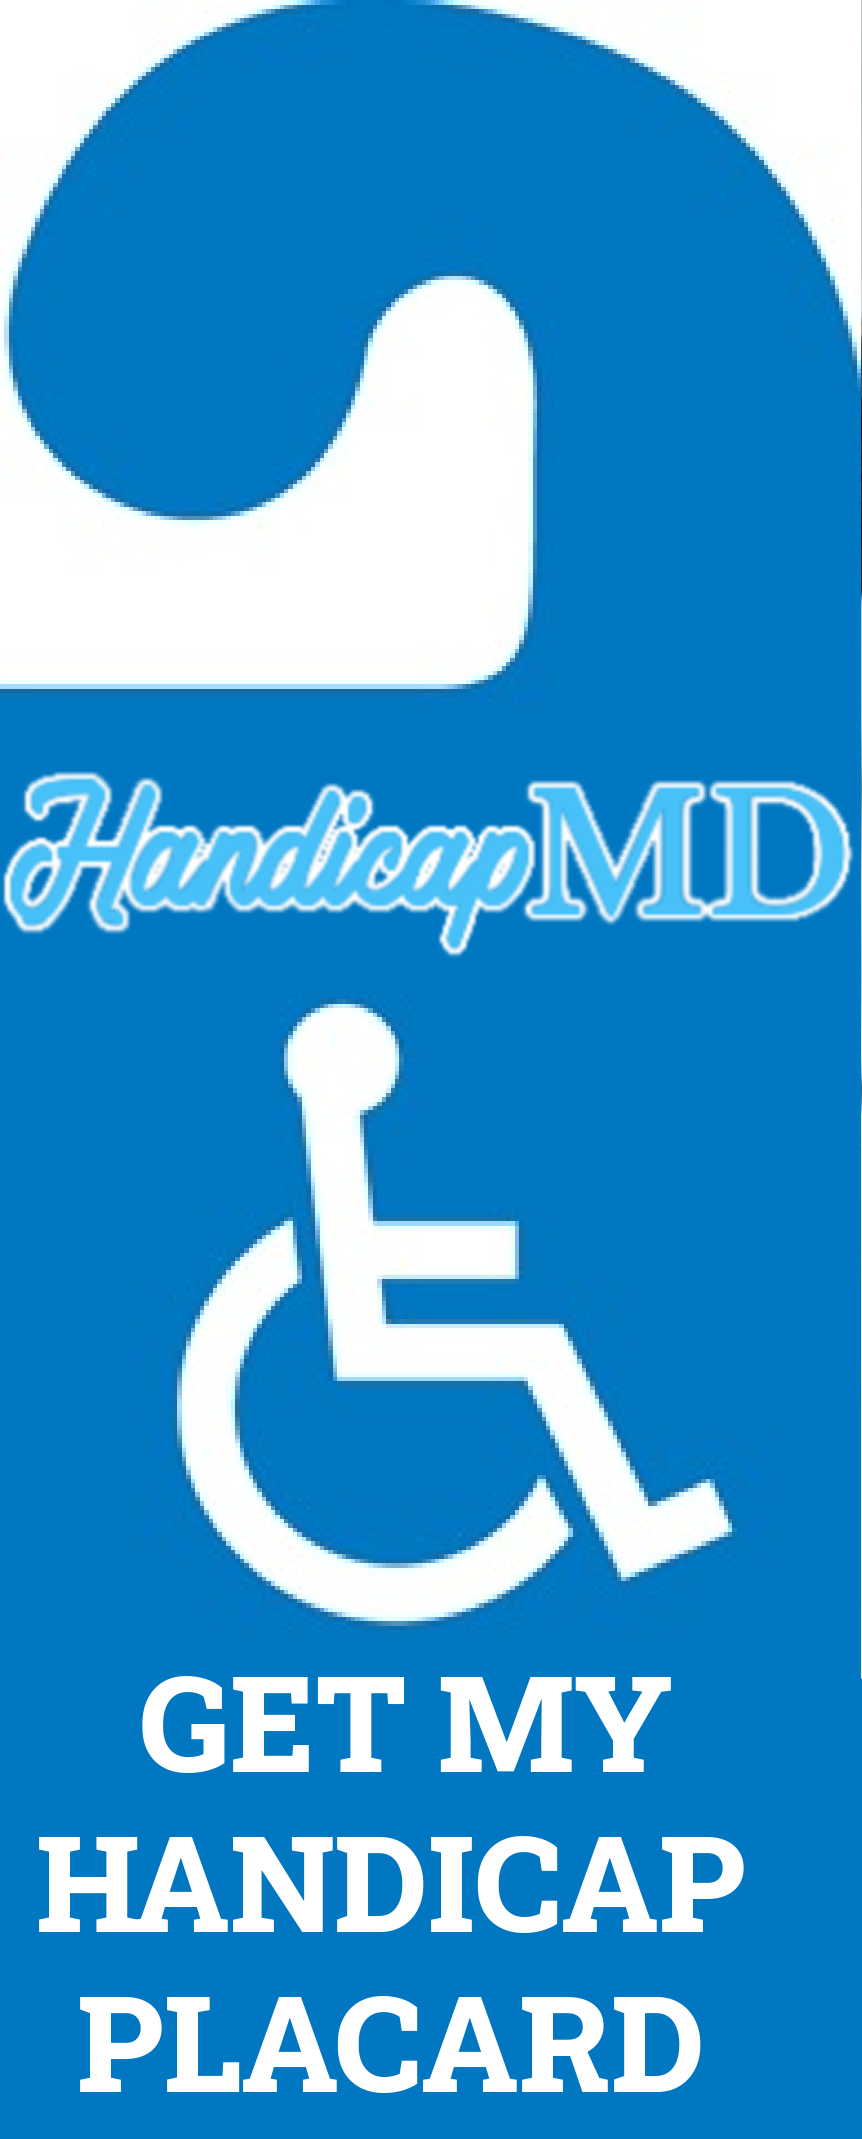 Washington Handicap Parking Placards